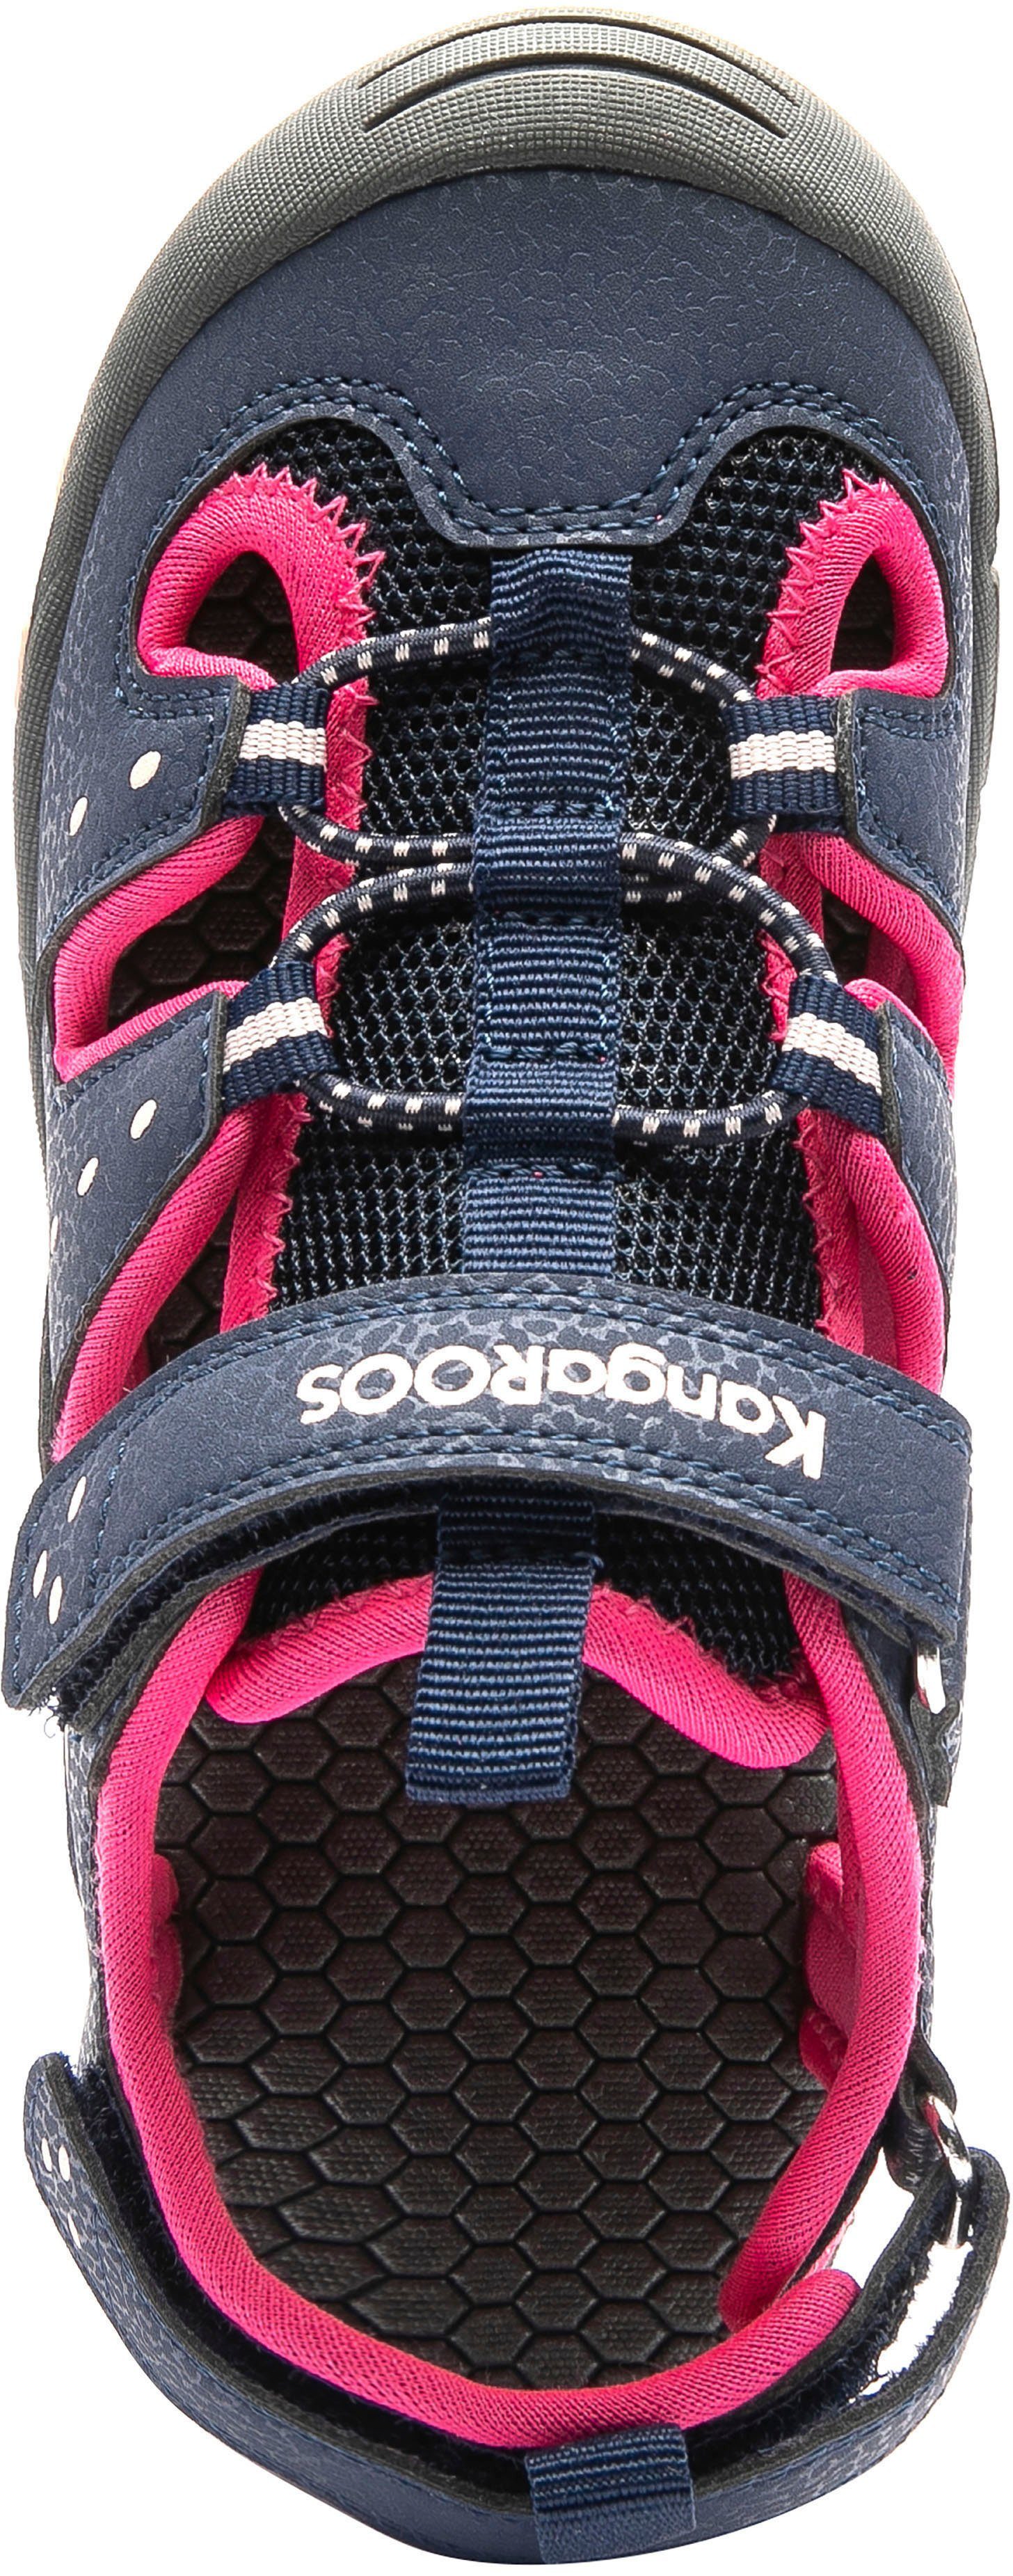 KangaROOS K-Trek Sandale blau-pink Klettverschluss mit